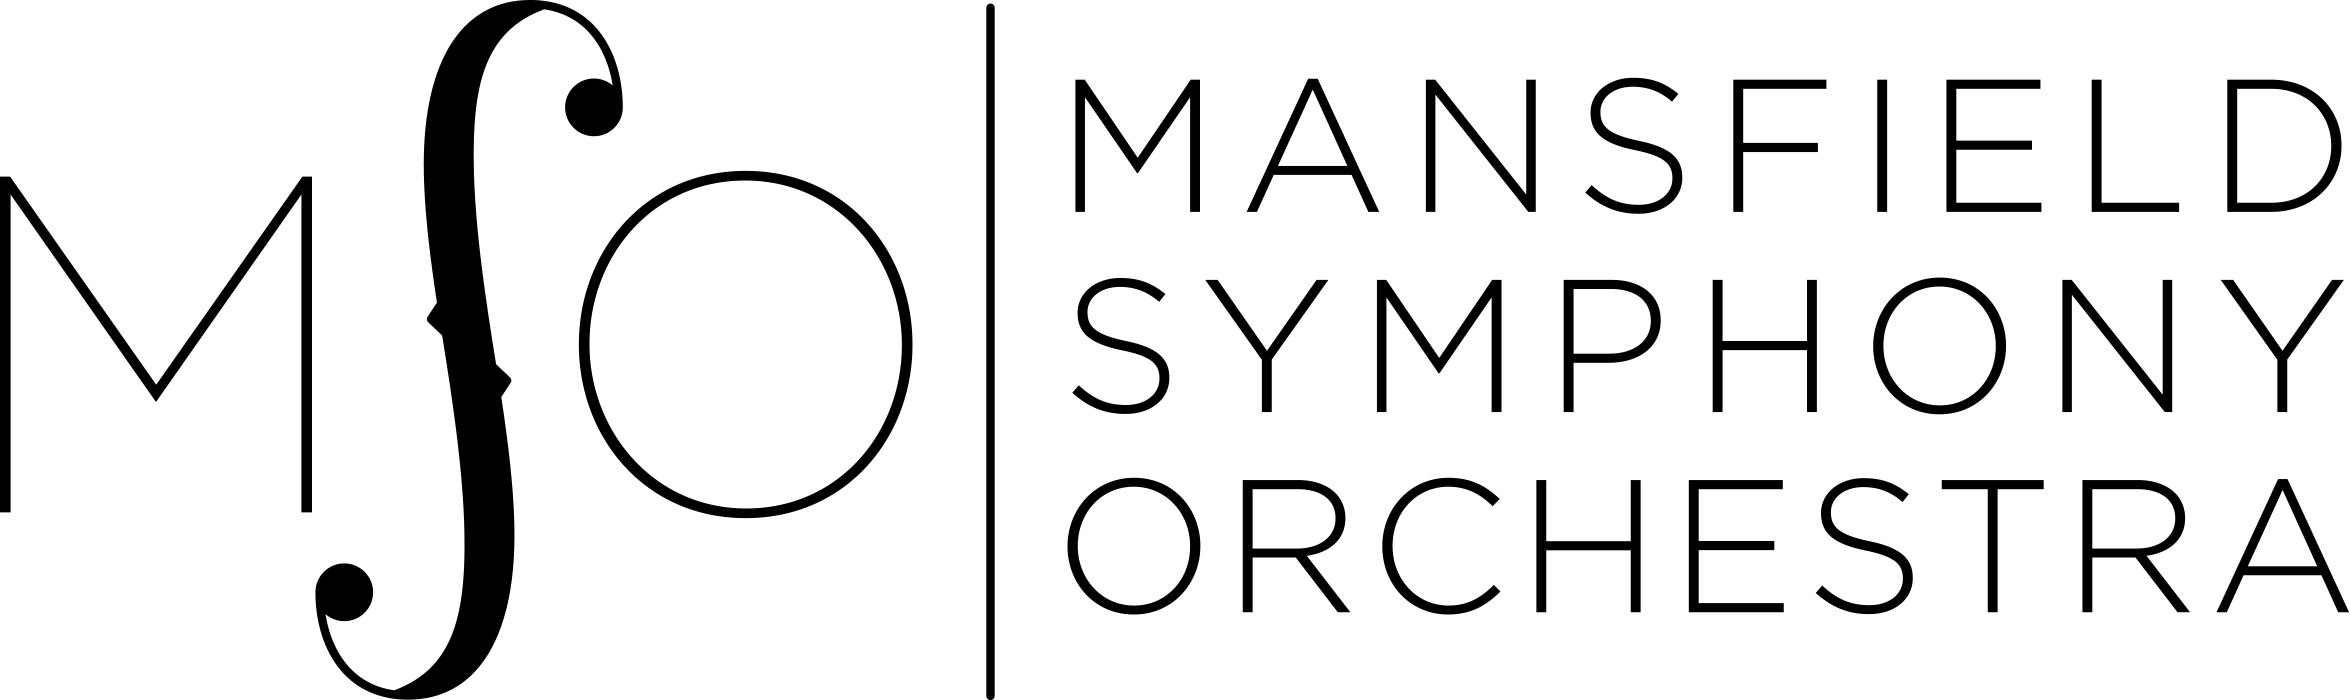 Mansfield Symphony Orchestra logo